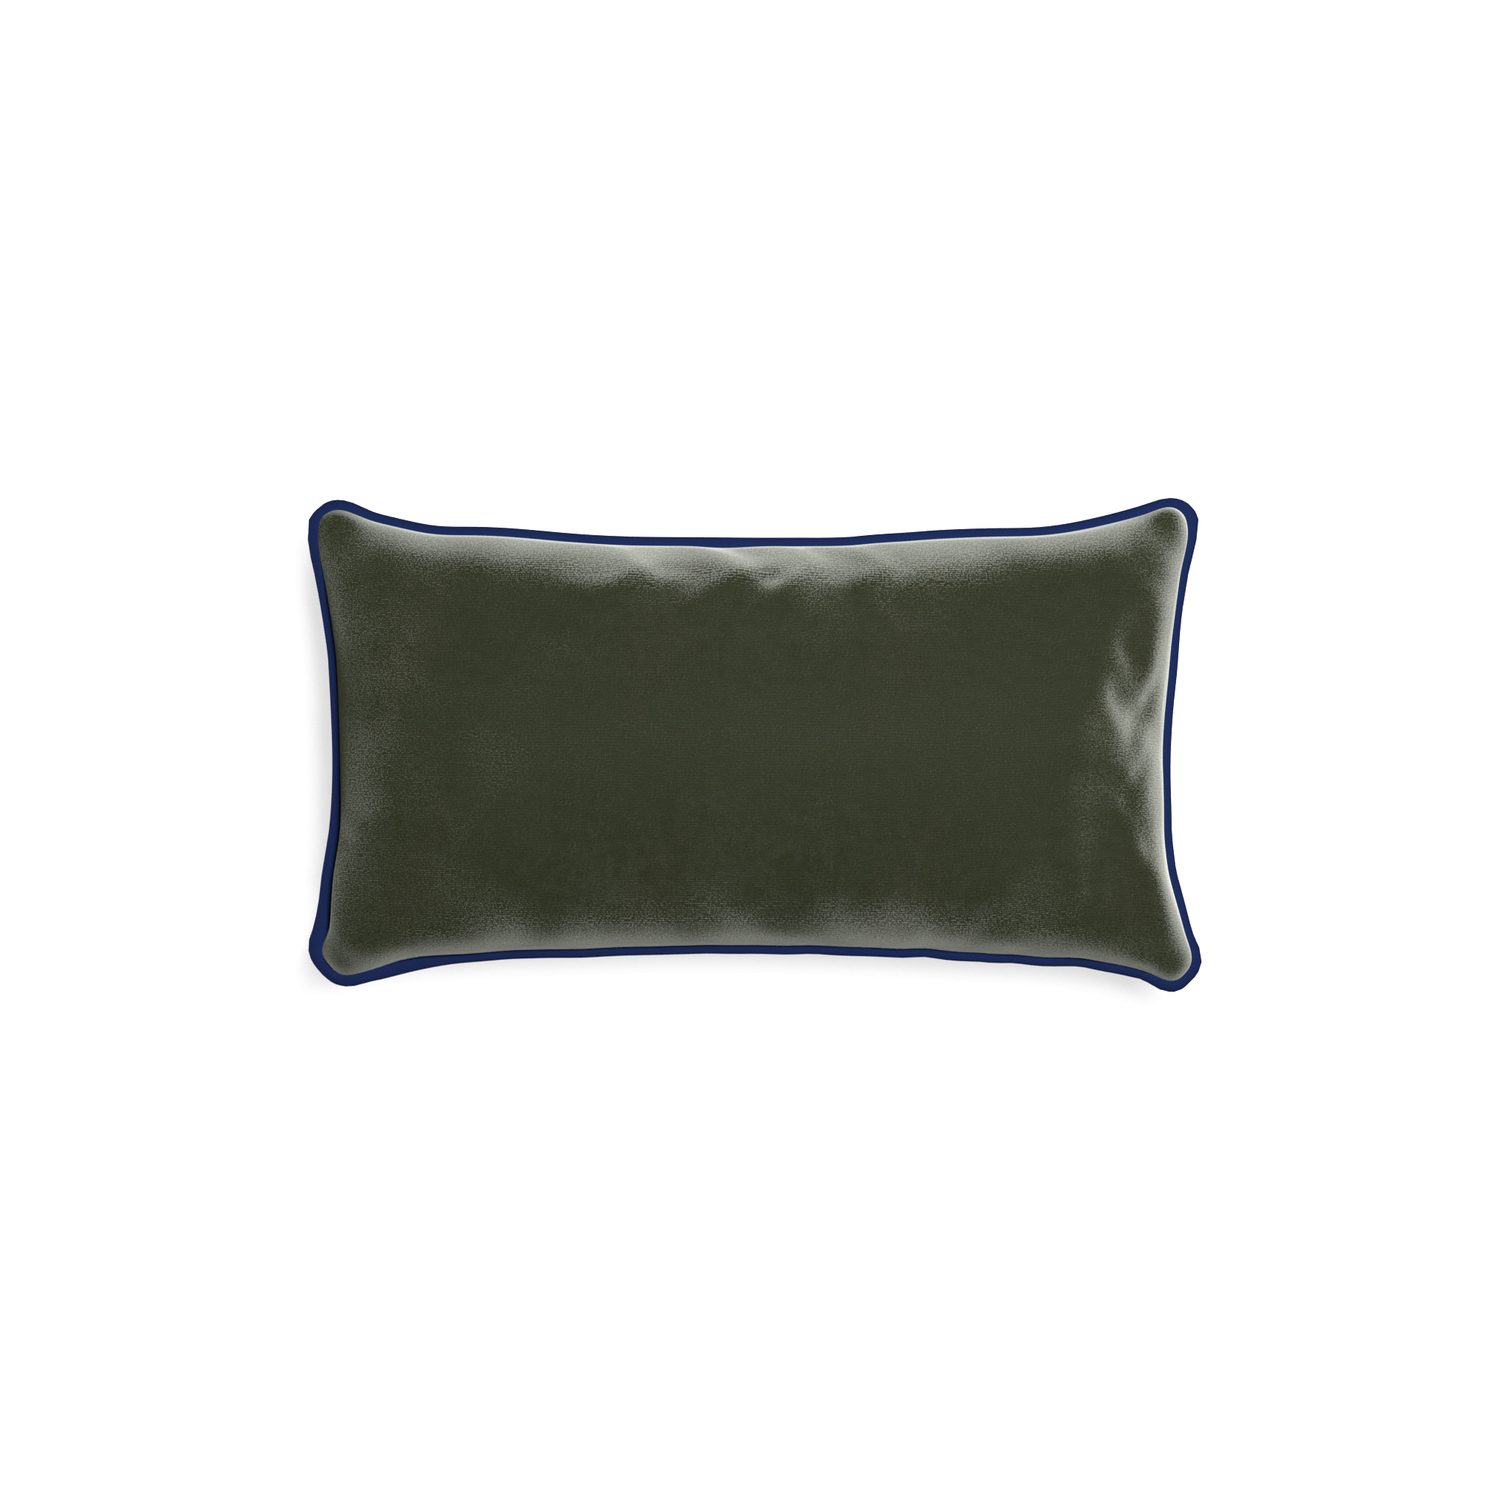 rectangle fern green velvet pillow with navy blue piping